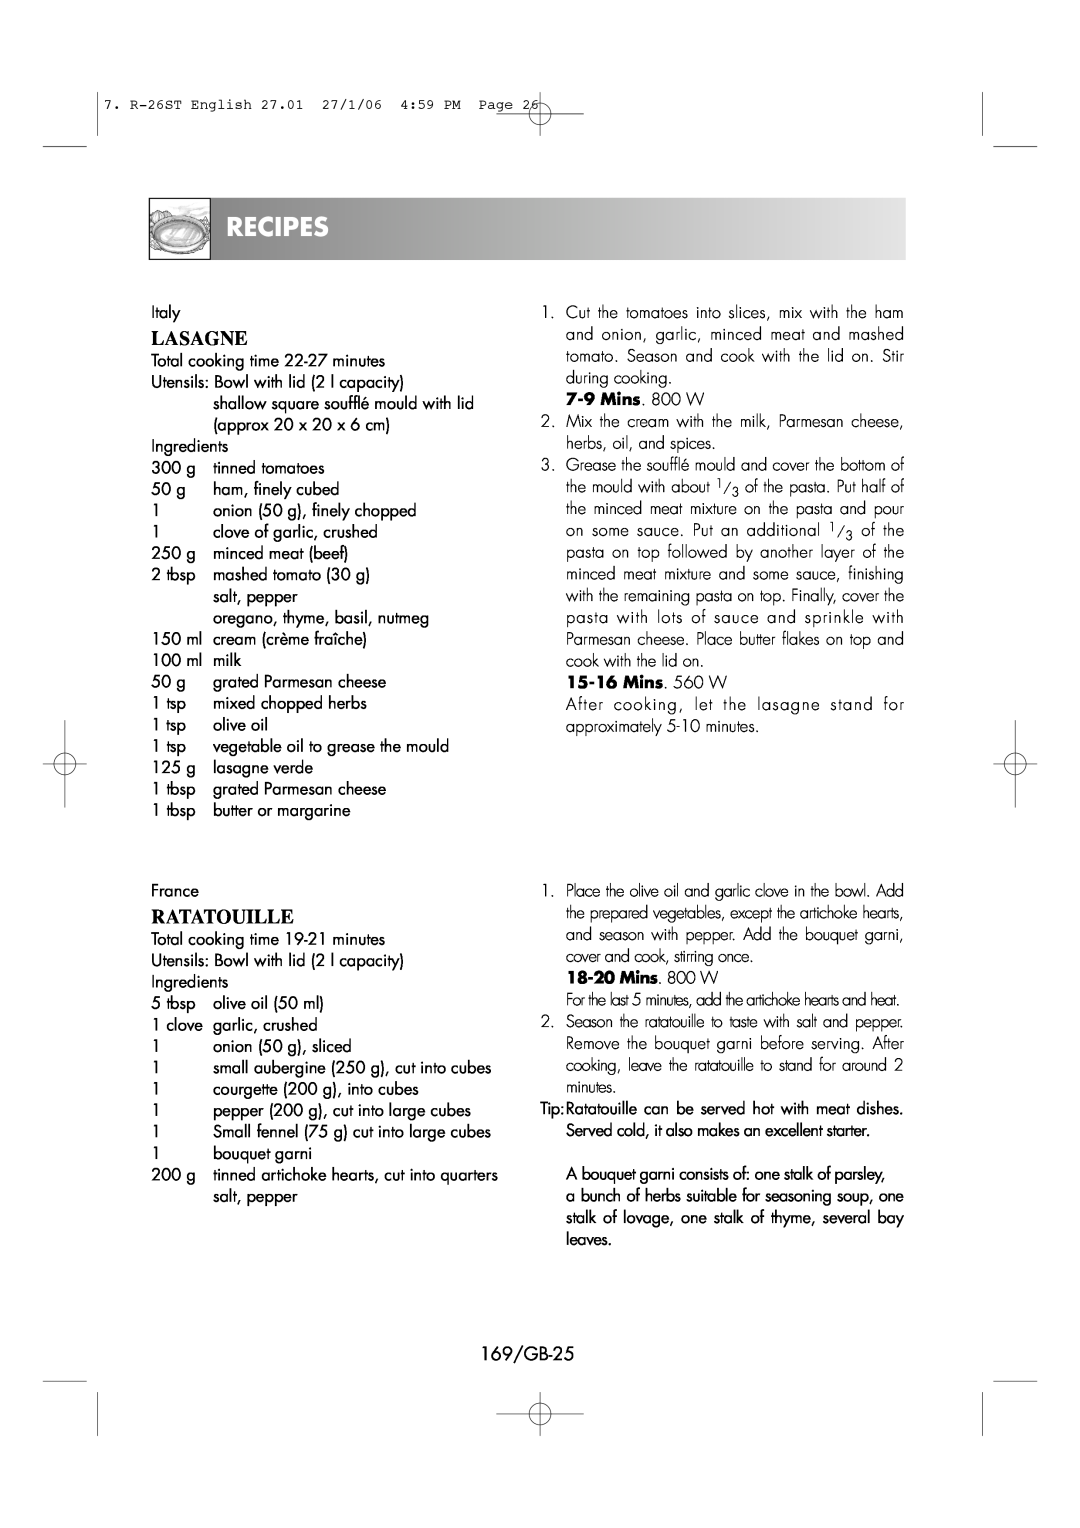 Sharp R-26ST manual Lasagne, Ratatouille, Recipes, 169/GB-25 